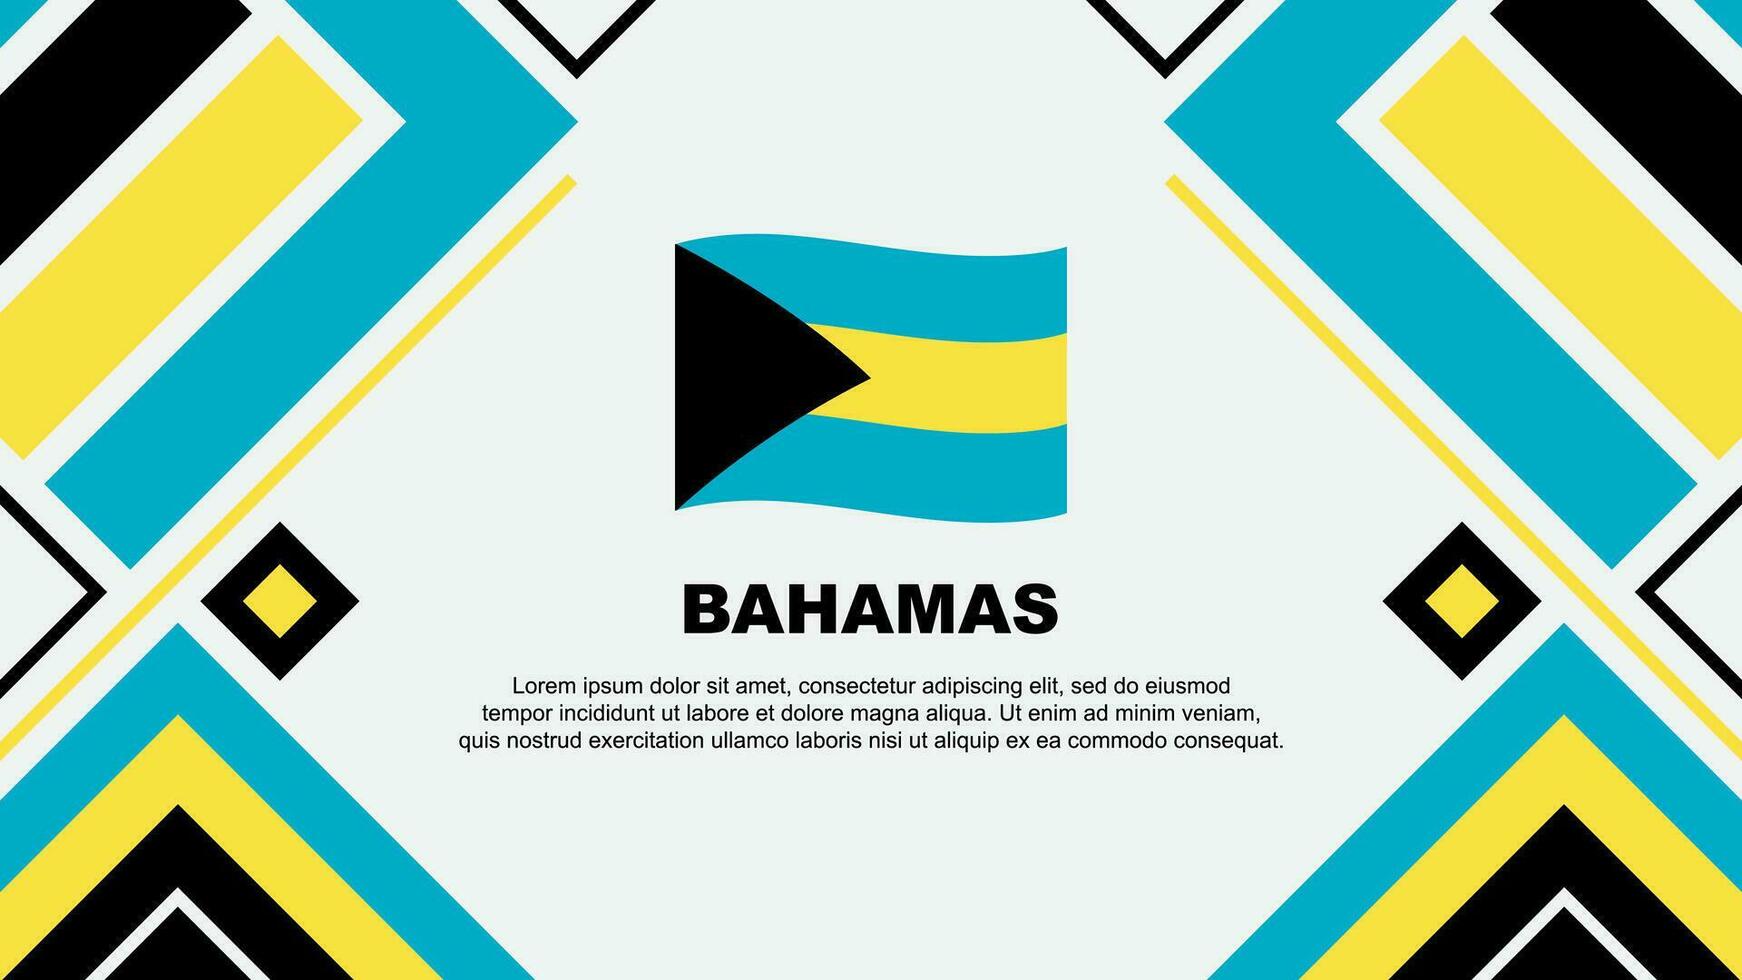 Bahamas Flagge abstrakt Hintergrund Design Vorlage. Bahamas Unabhängigkeit Tag Banner Hintergrund Vektor Illustration. Bahamas Flagge